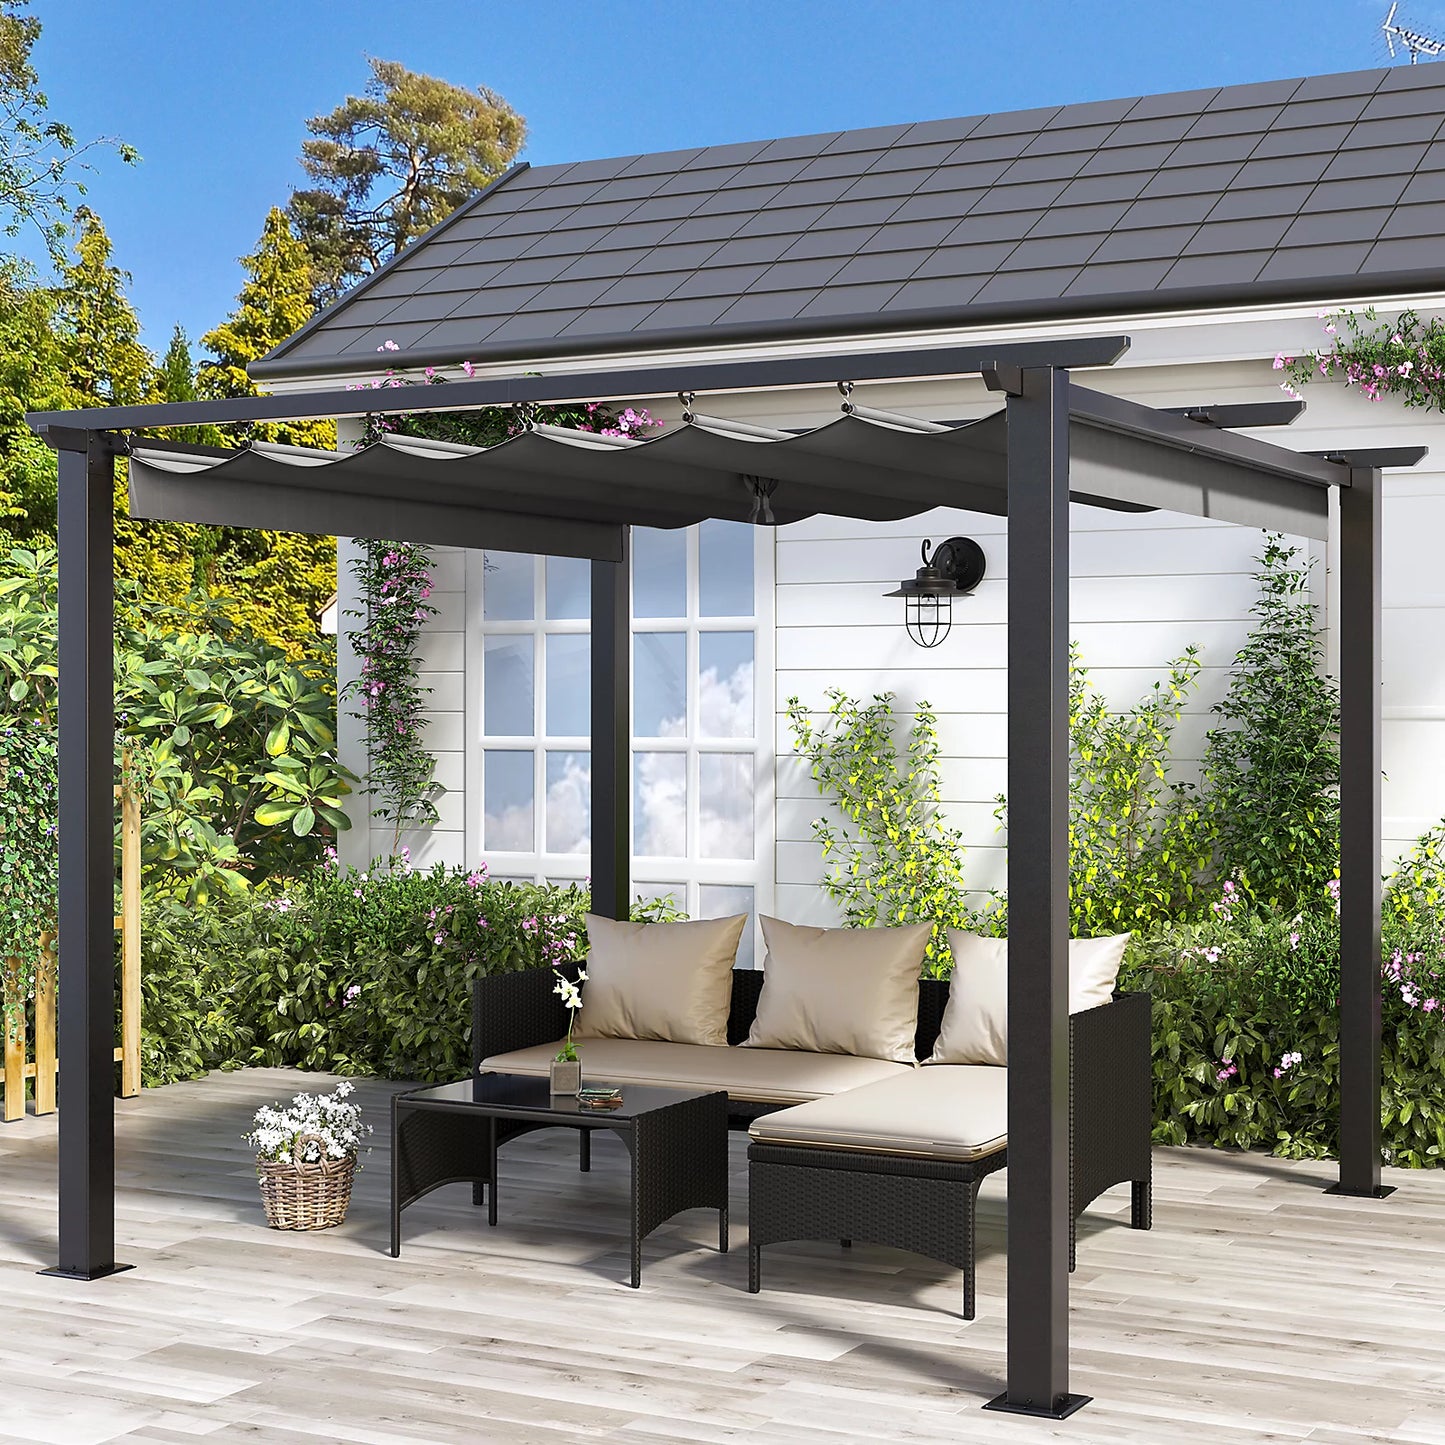 Pergola with Retractable Canopy Roof Garden Outdoor Patio